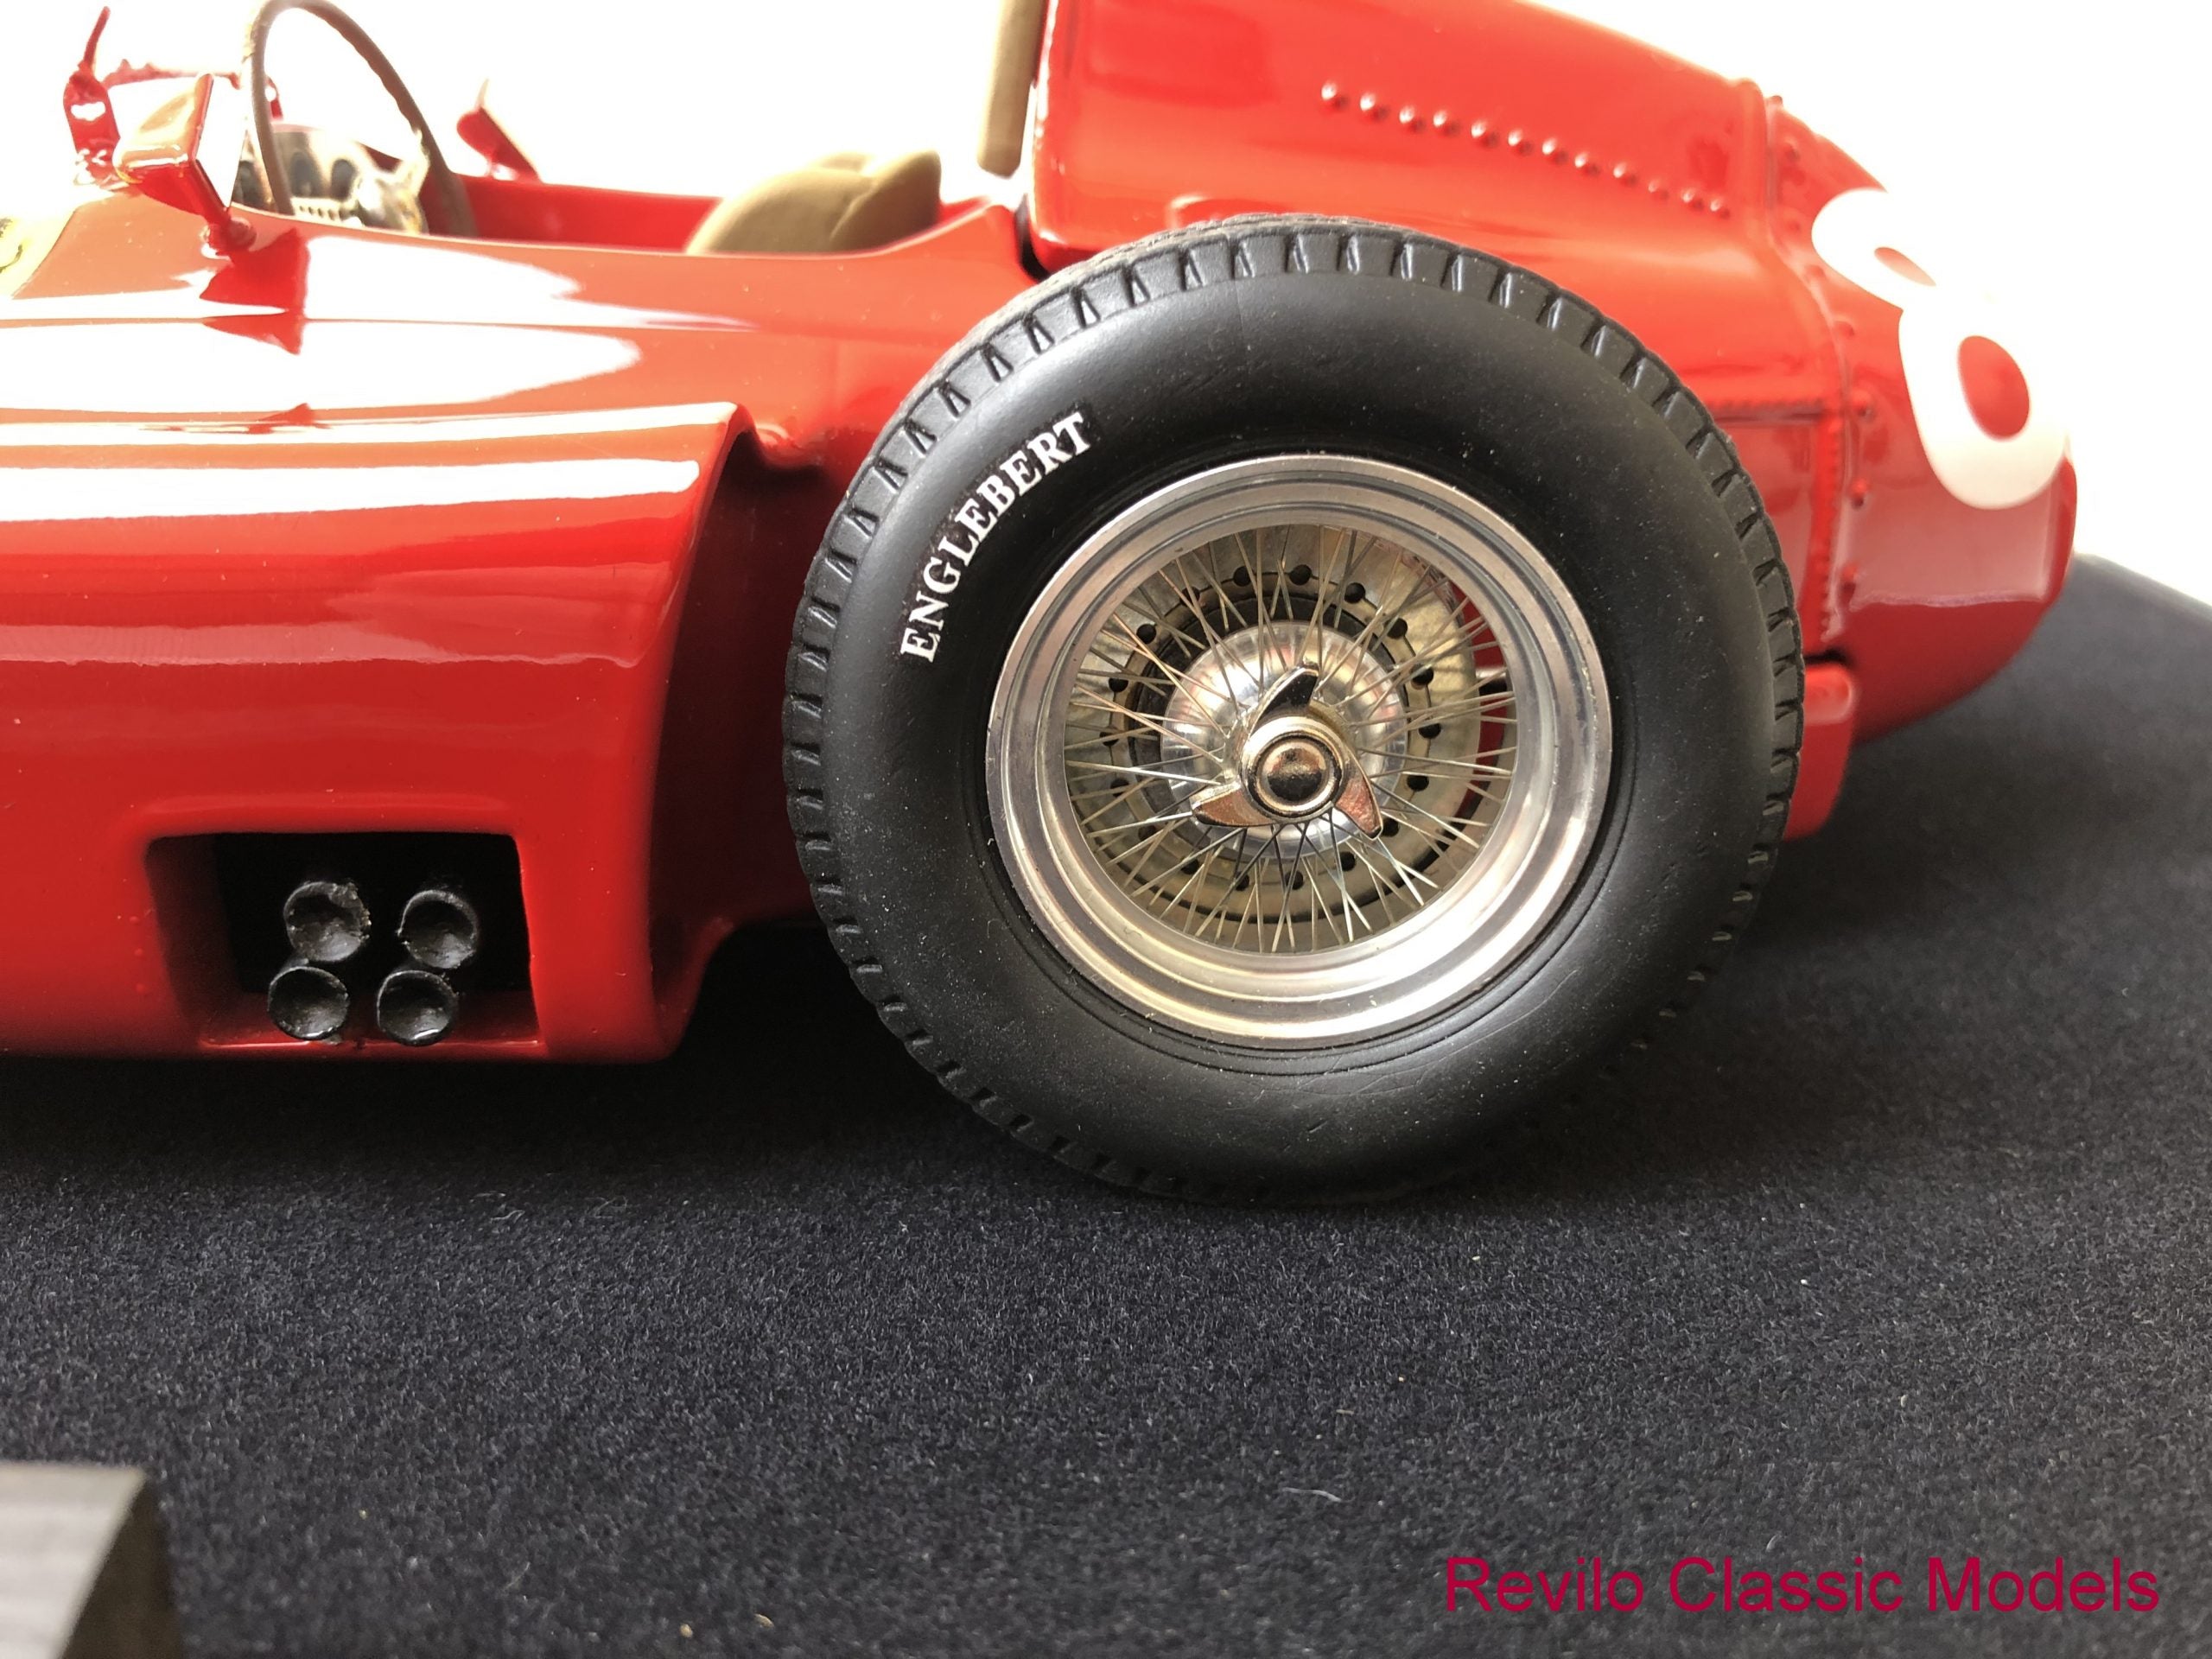 1:12 scale 1956 Ferrari/Lancia D50